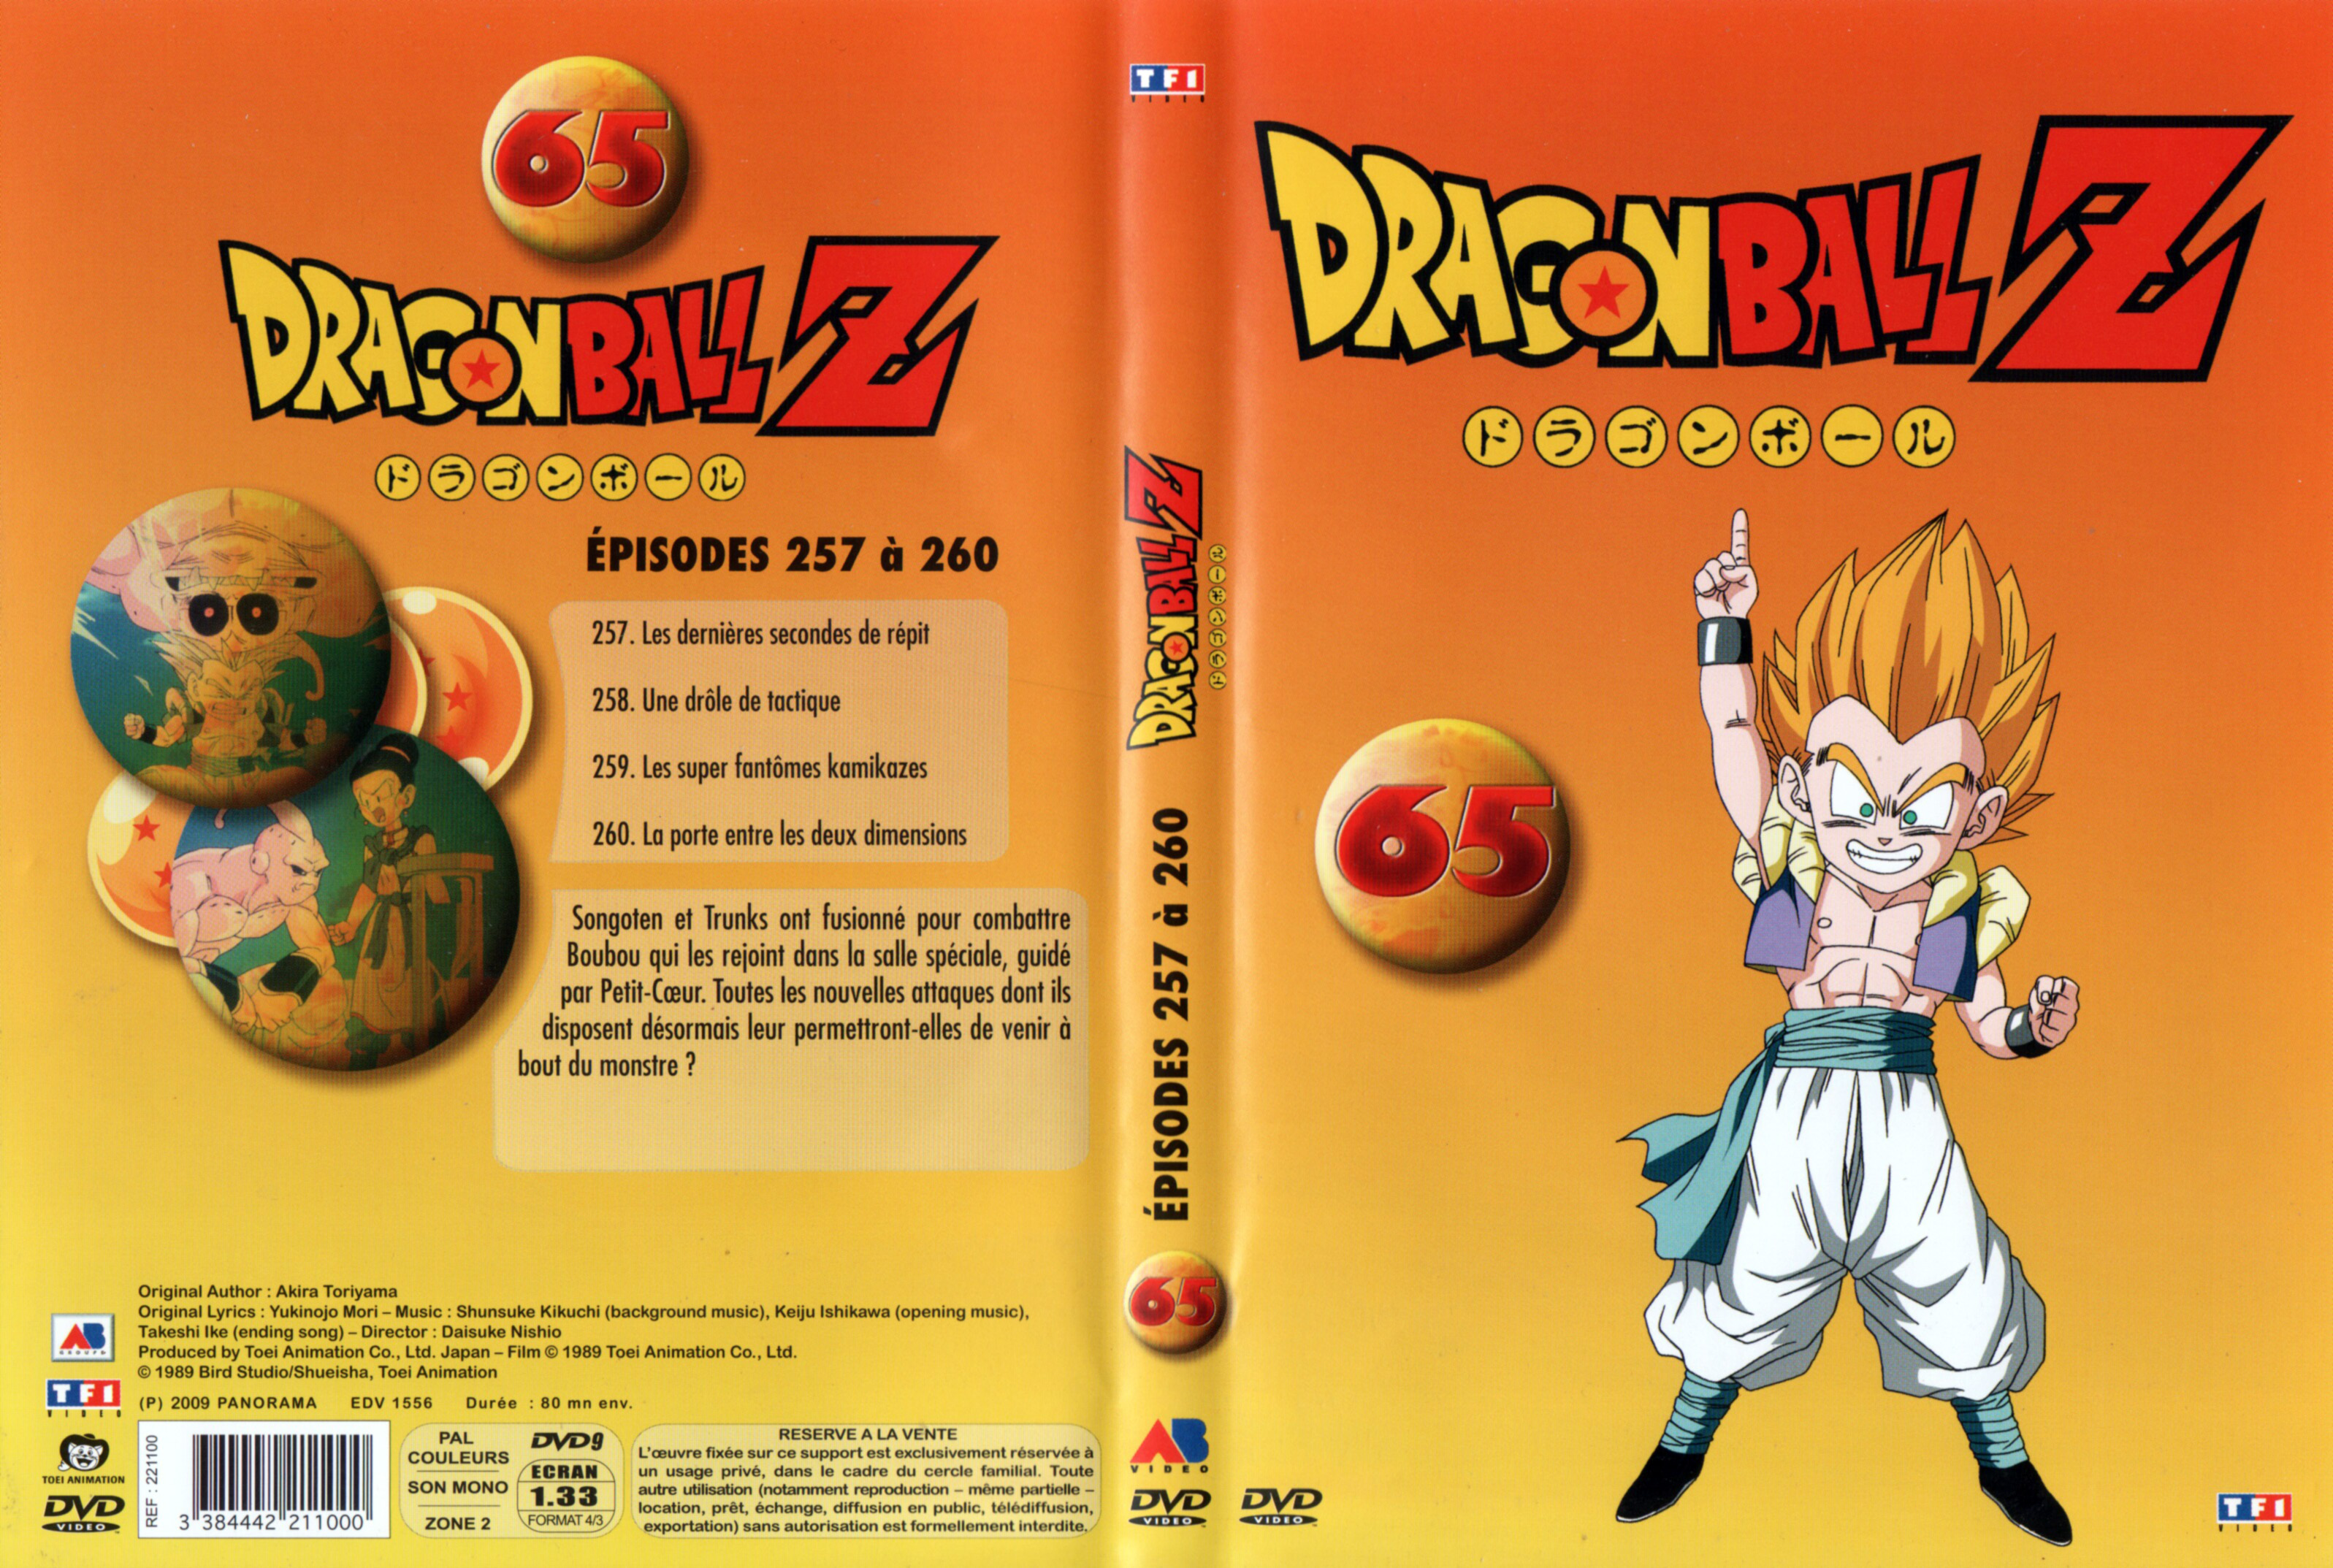 Jaquette DVD Dragon Ball Z vol 65